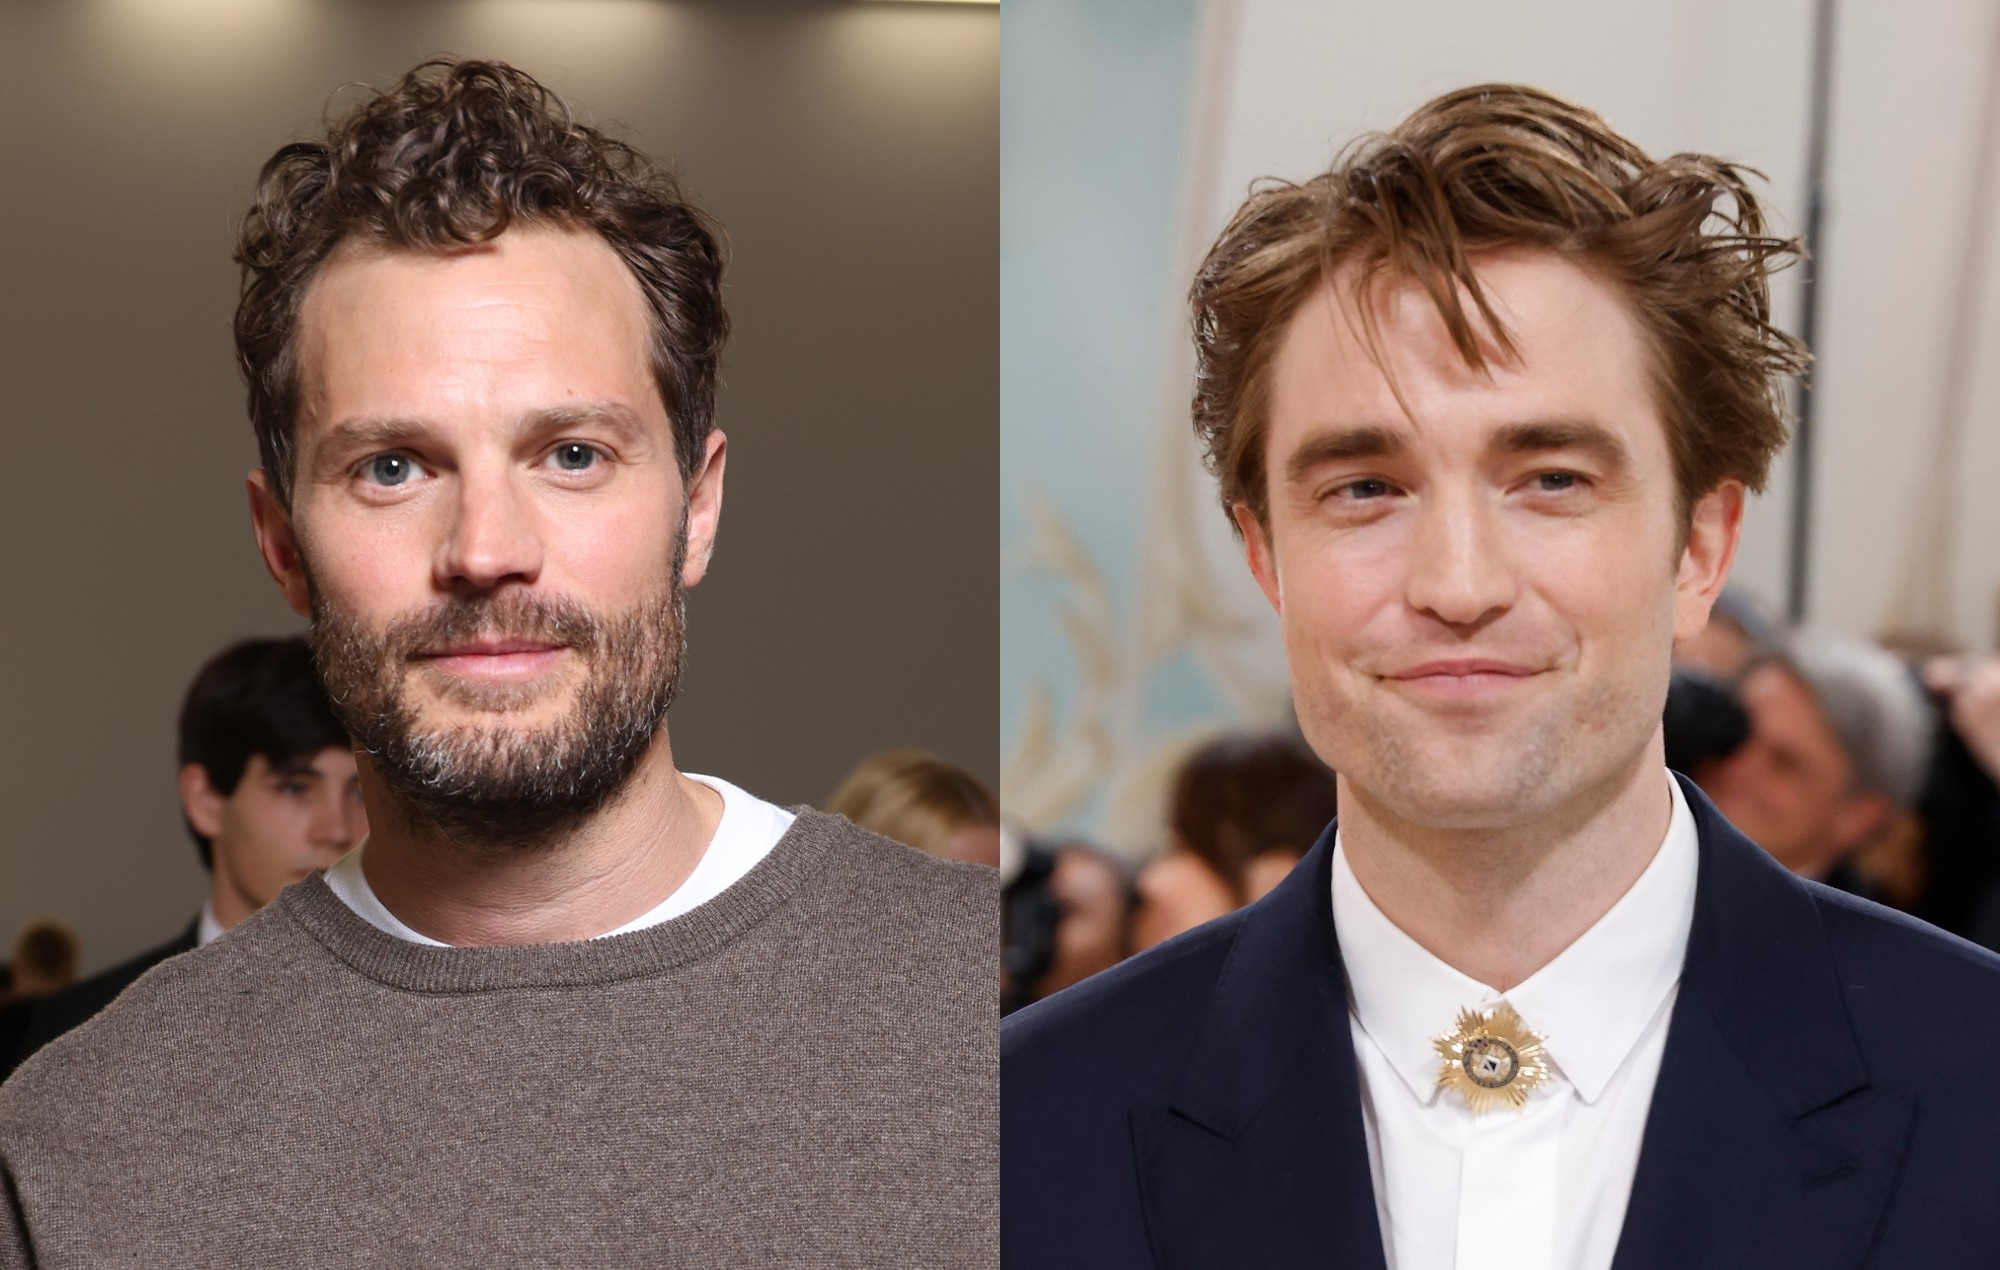 Jamie Dornan says he used to be “quite jealous” of Robert Pattinson